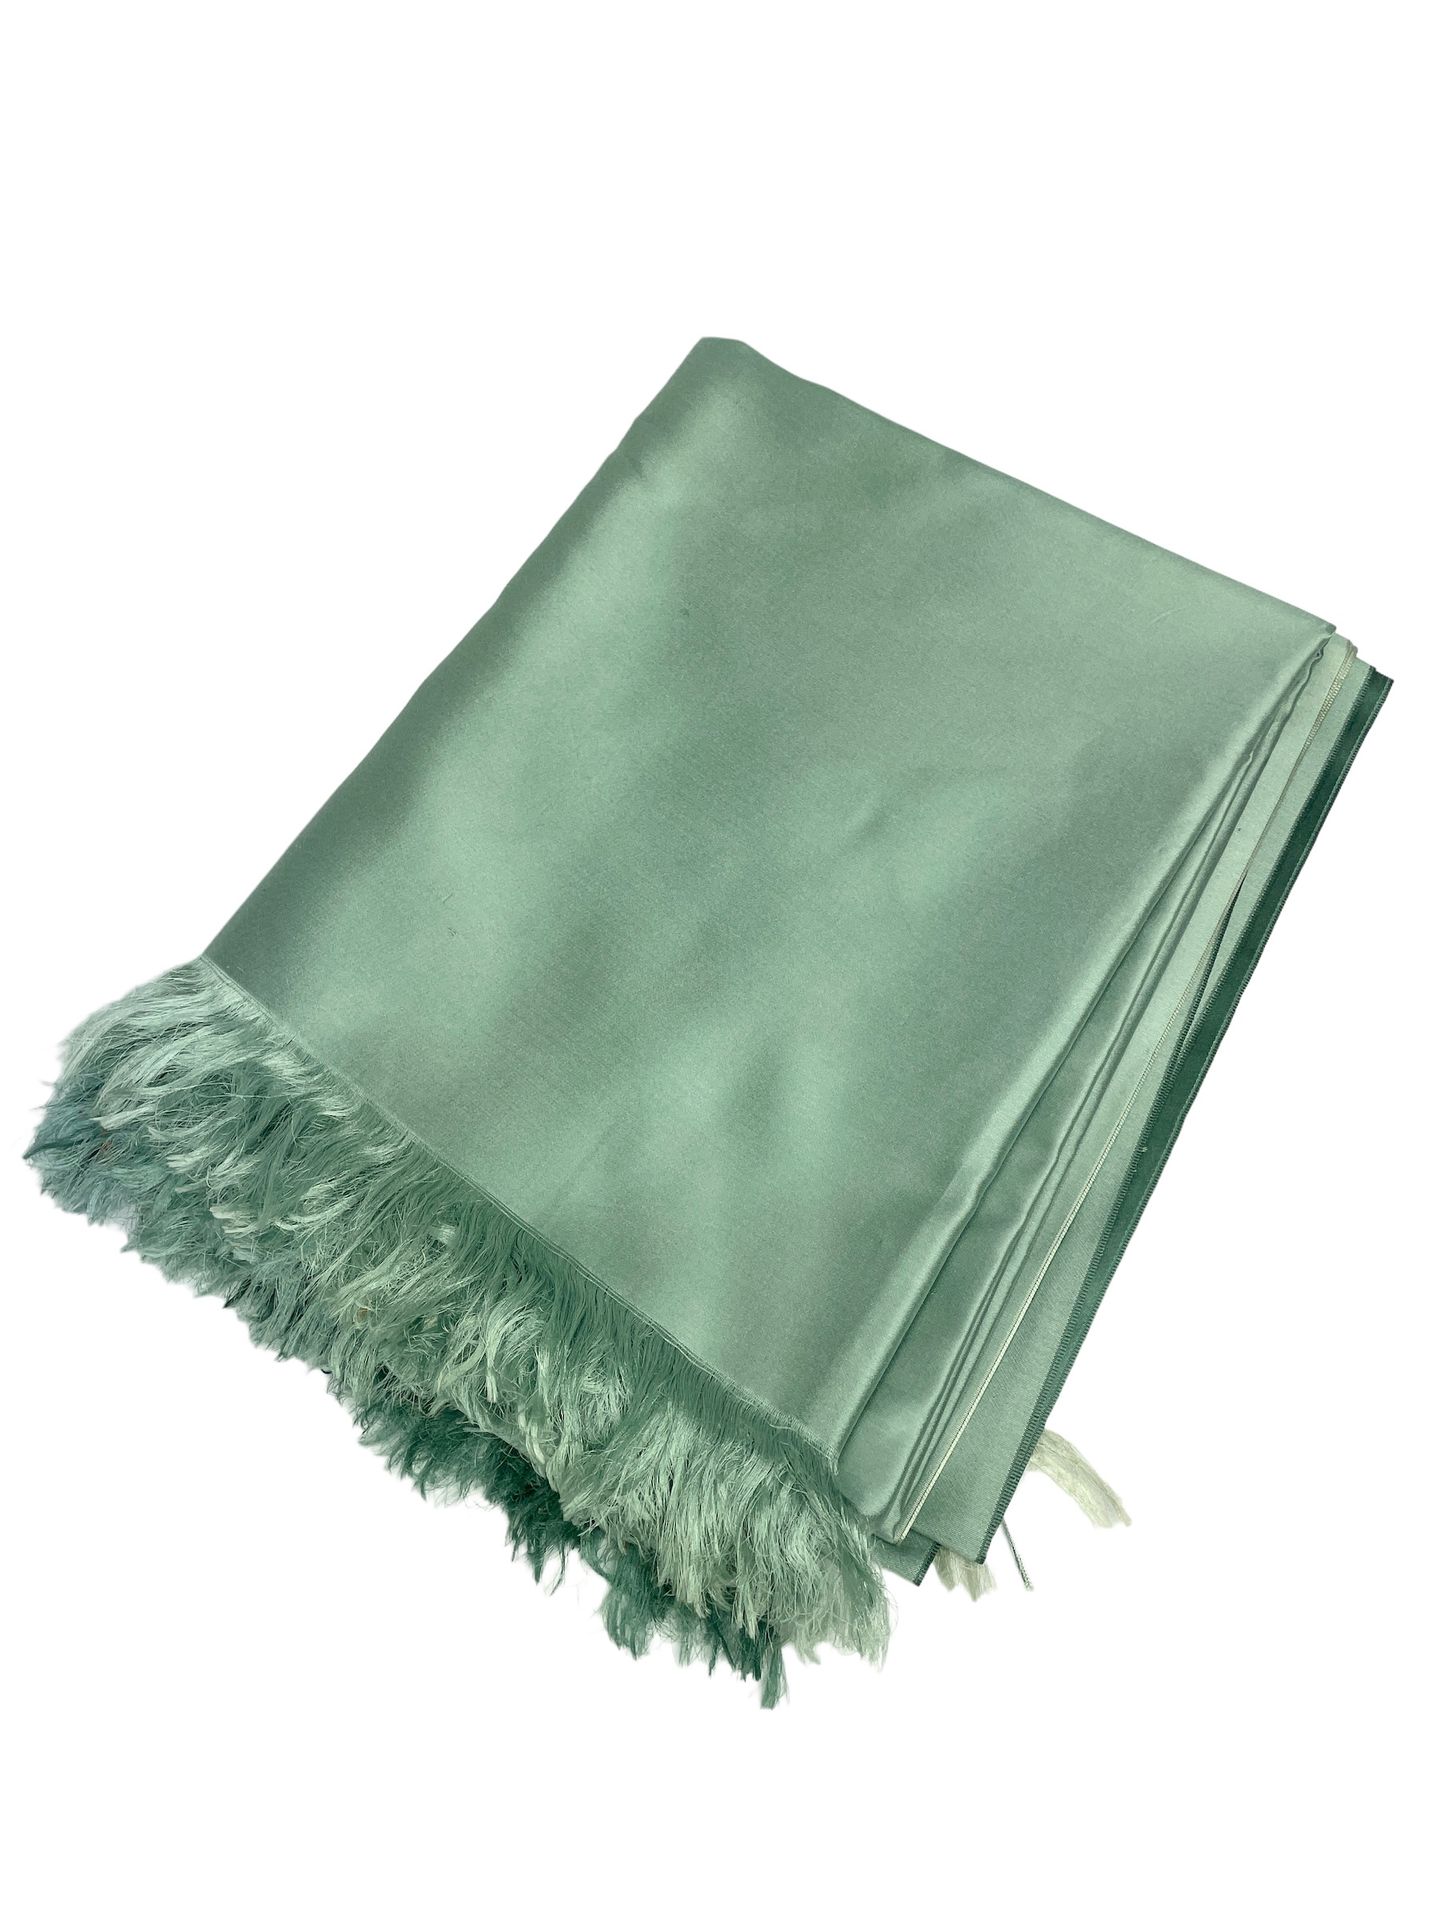 Null 巴黎爱马仕 
淡蓝色丝质塔夫绸晚装围巾，边缘有流苏。
230 x 90 cm
状况非常好